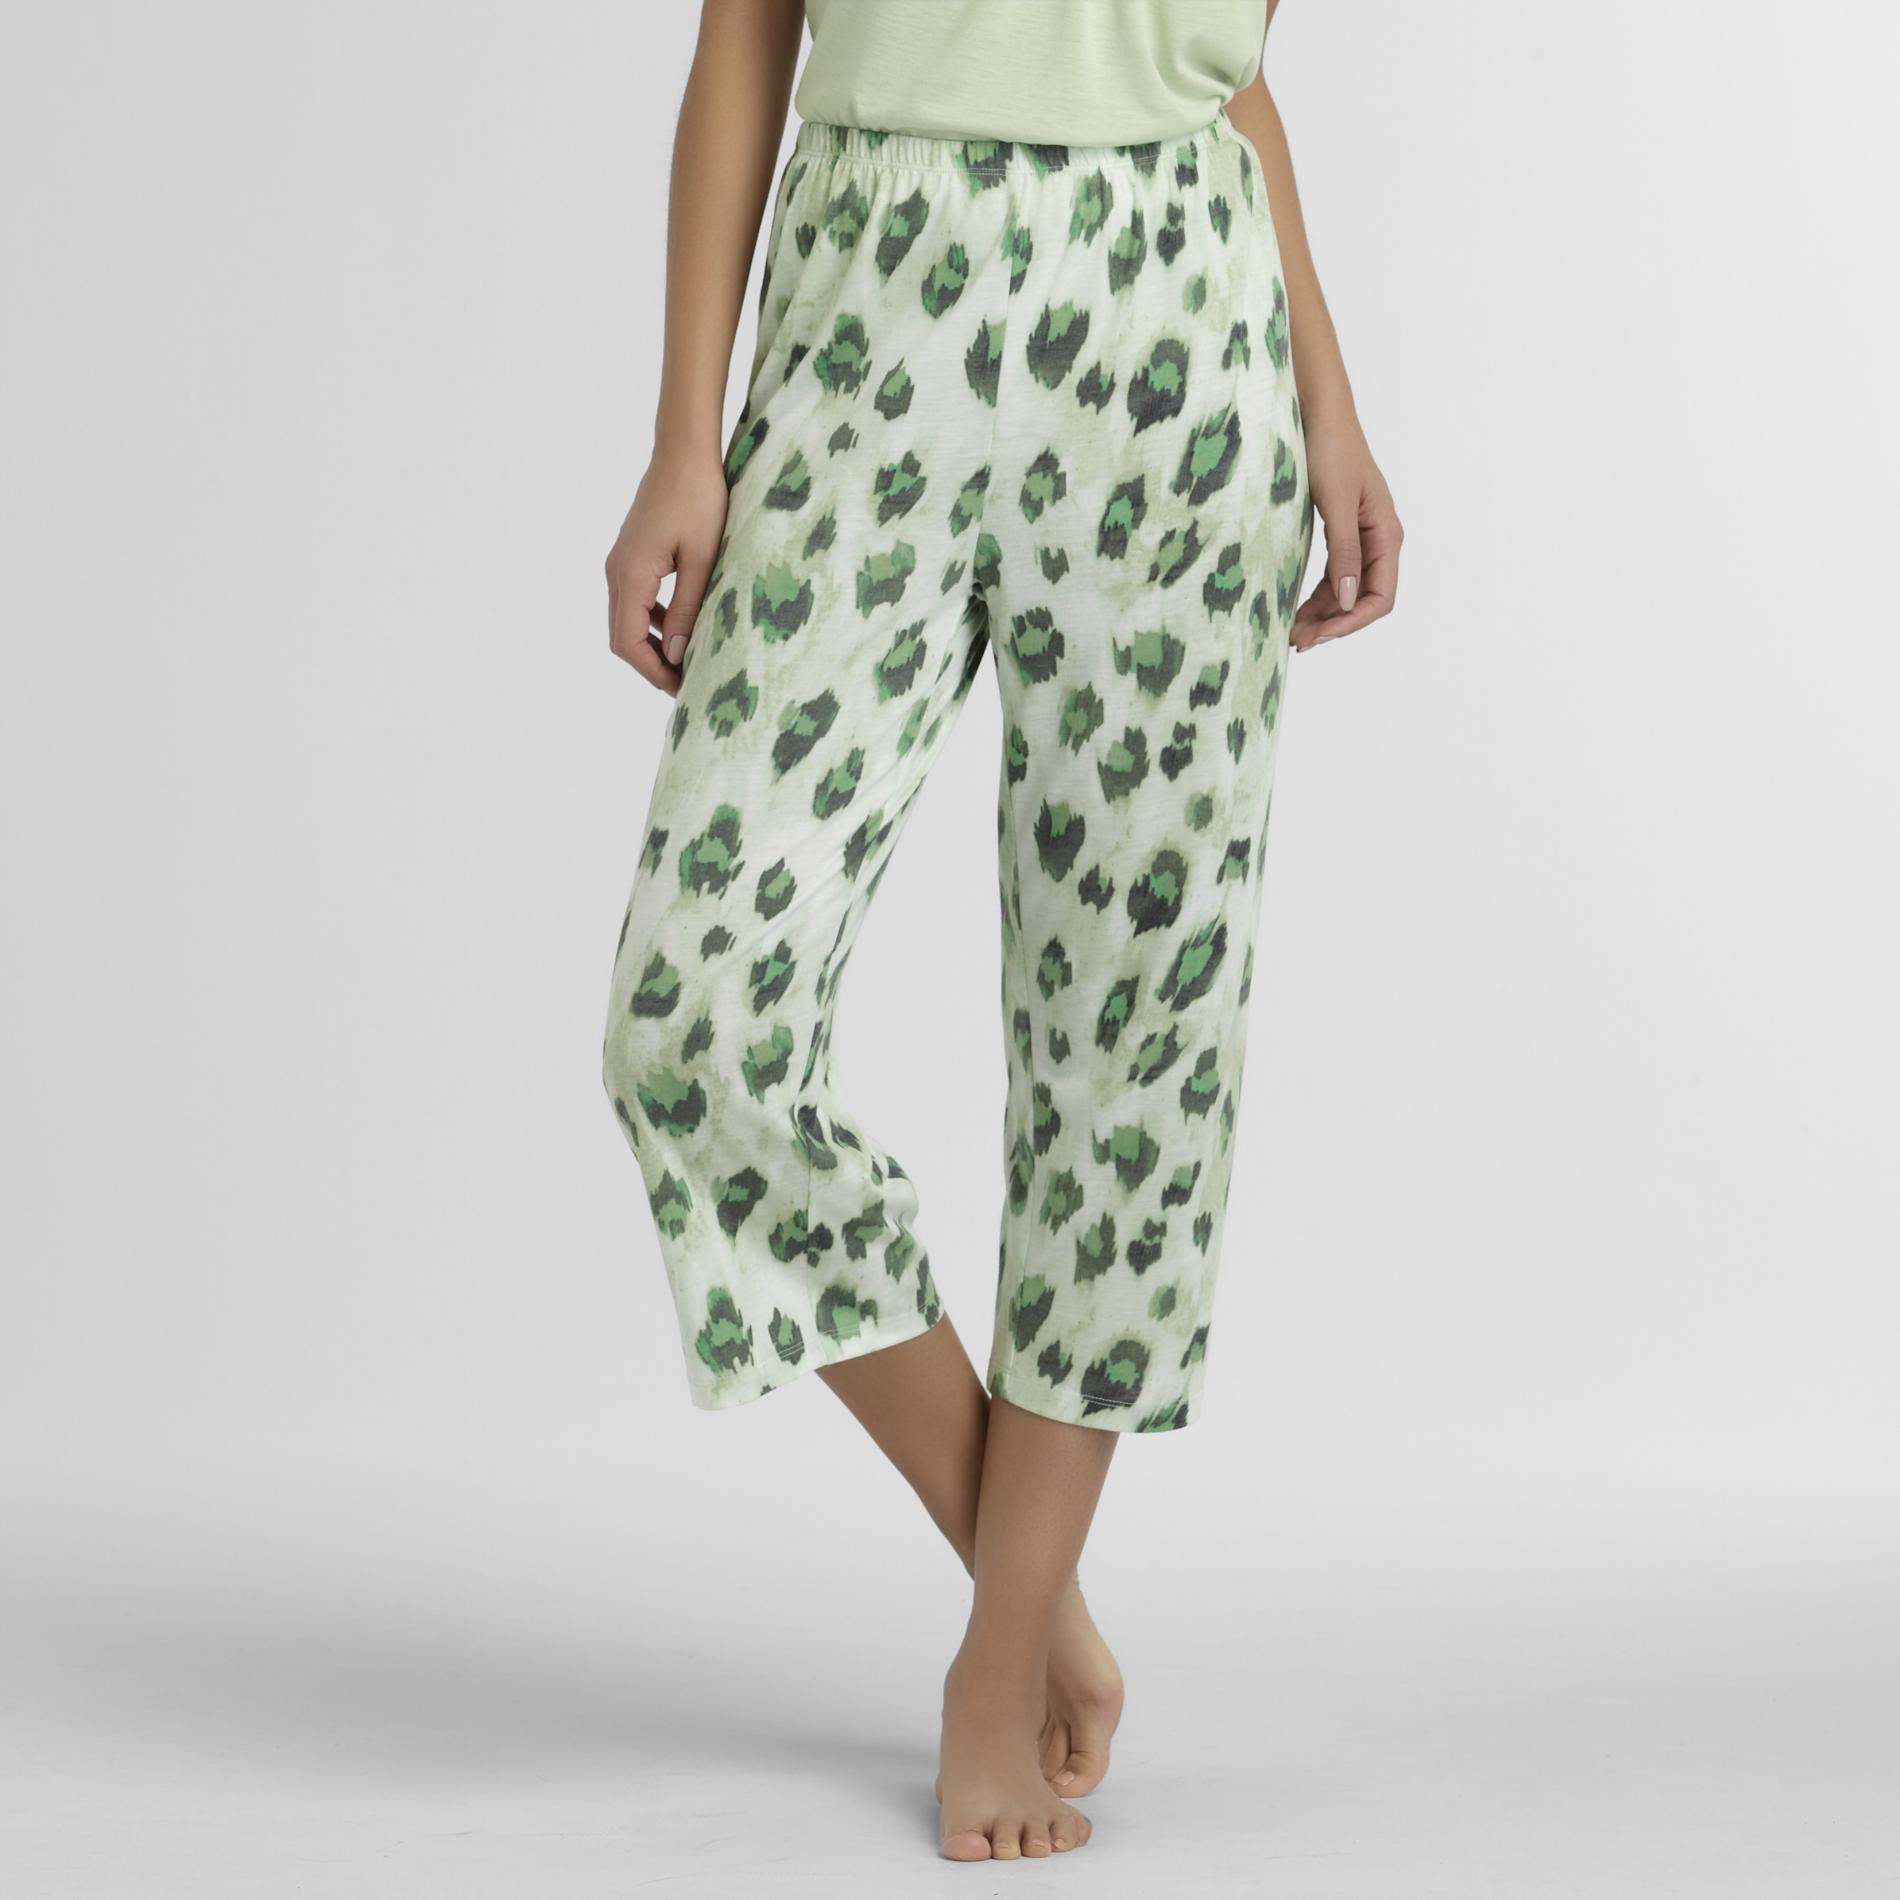 Sofia by Sofia Vergara Women's Pajama Pants - Leopard Print